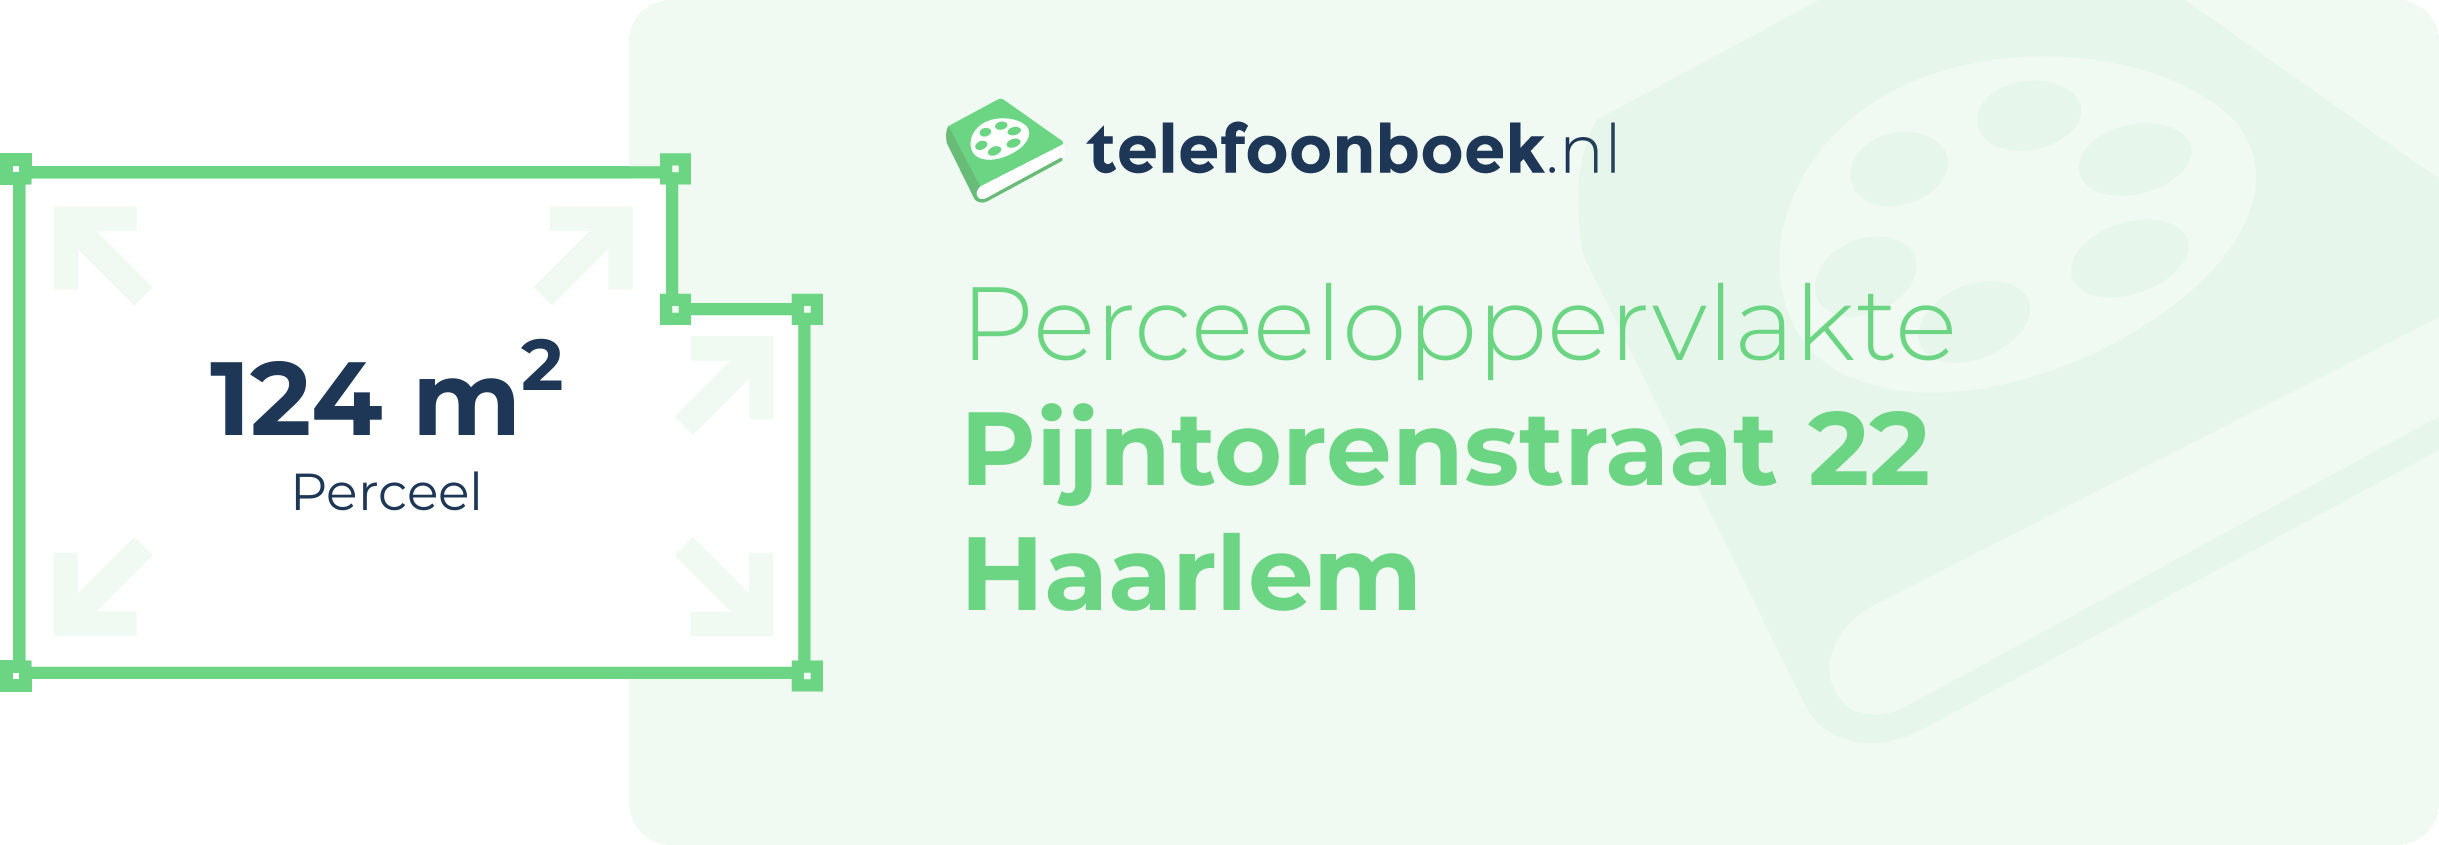 Perceeloppervlakte Pijntorenstraat 22 Haarlem